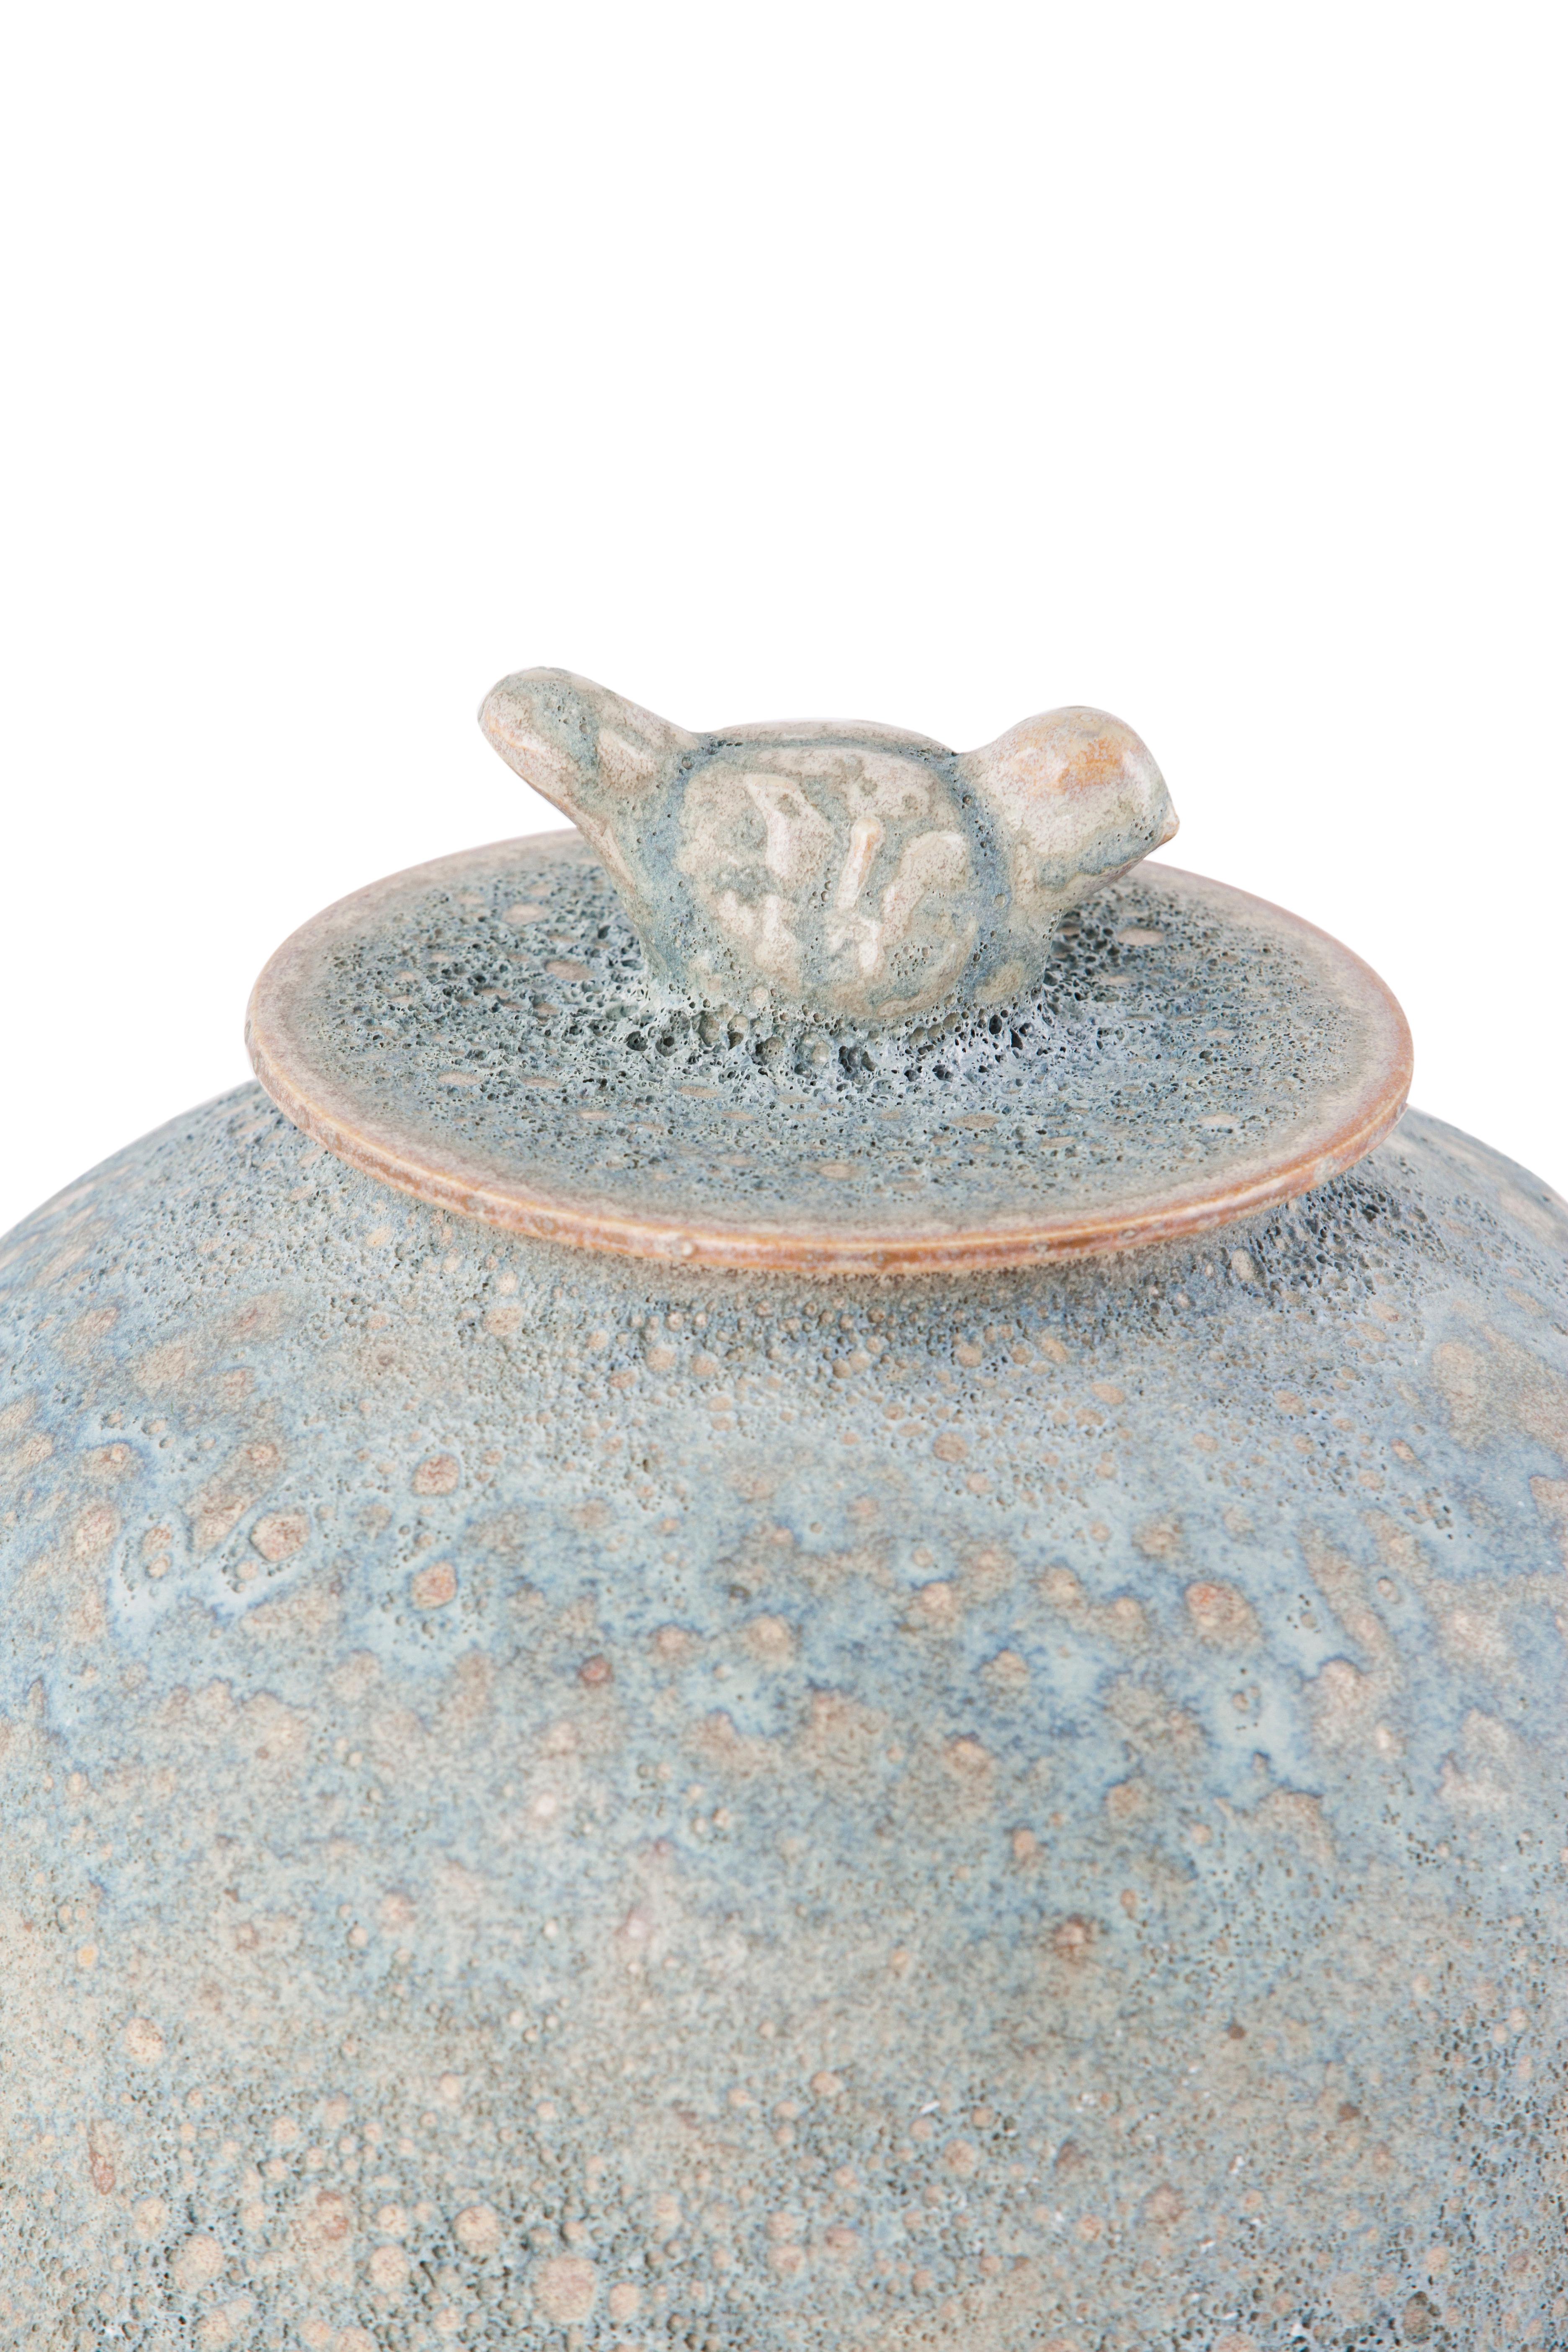 Modern Set/2 Porcelain Pots, Yang Pots, Light Blue, by Lusitanus Home For Sale